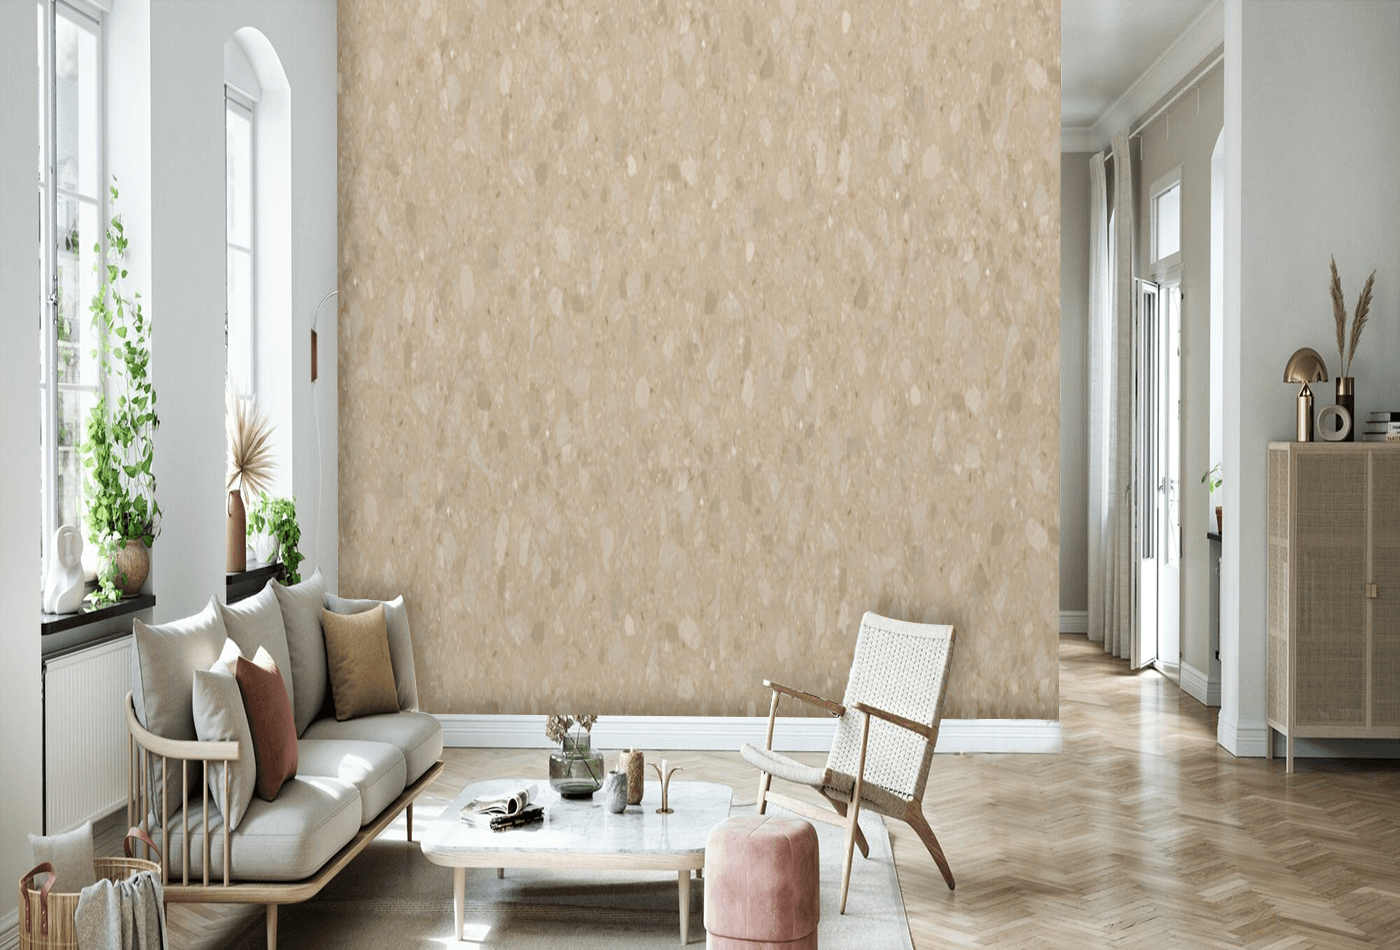 Botticino Terrazzo Surfaces for Classic Home, Justify?